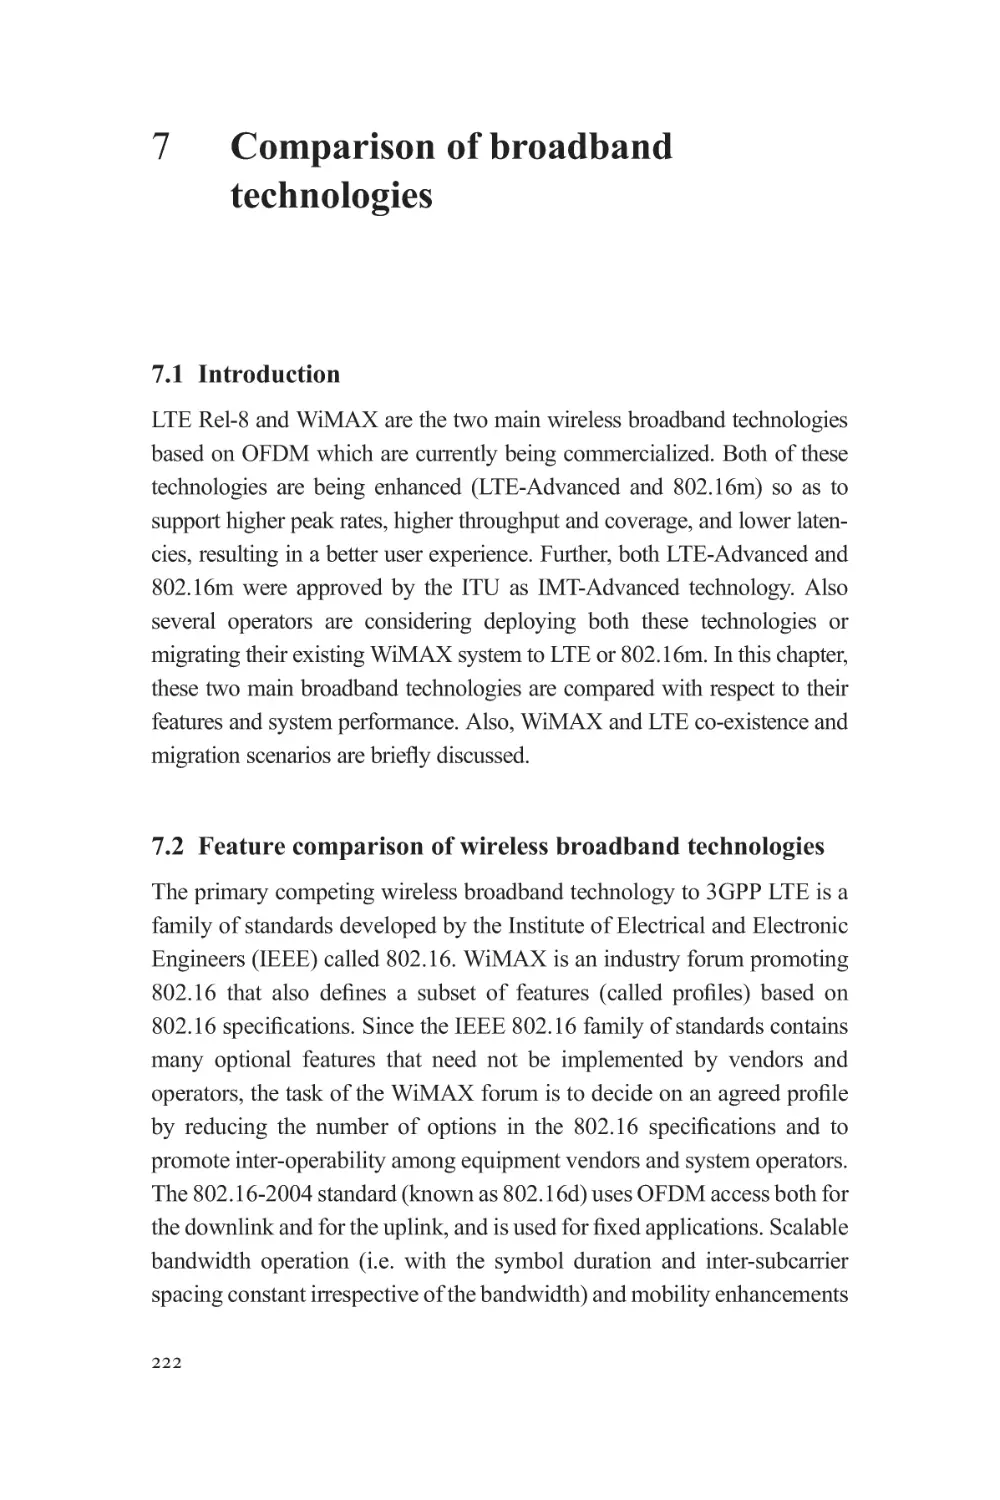 7 Comparison of broadband technologies
7.1 Introduction
7.2 Feature comparison of wireless broadband technologies